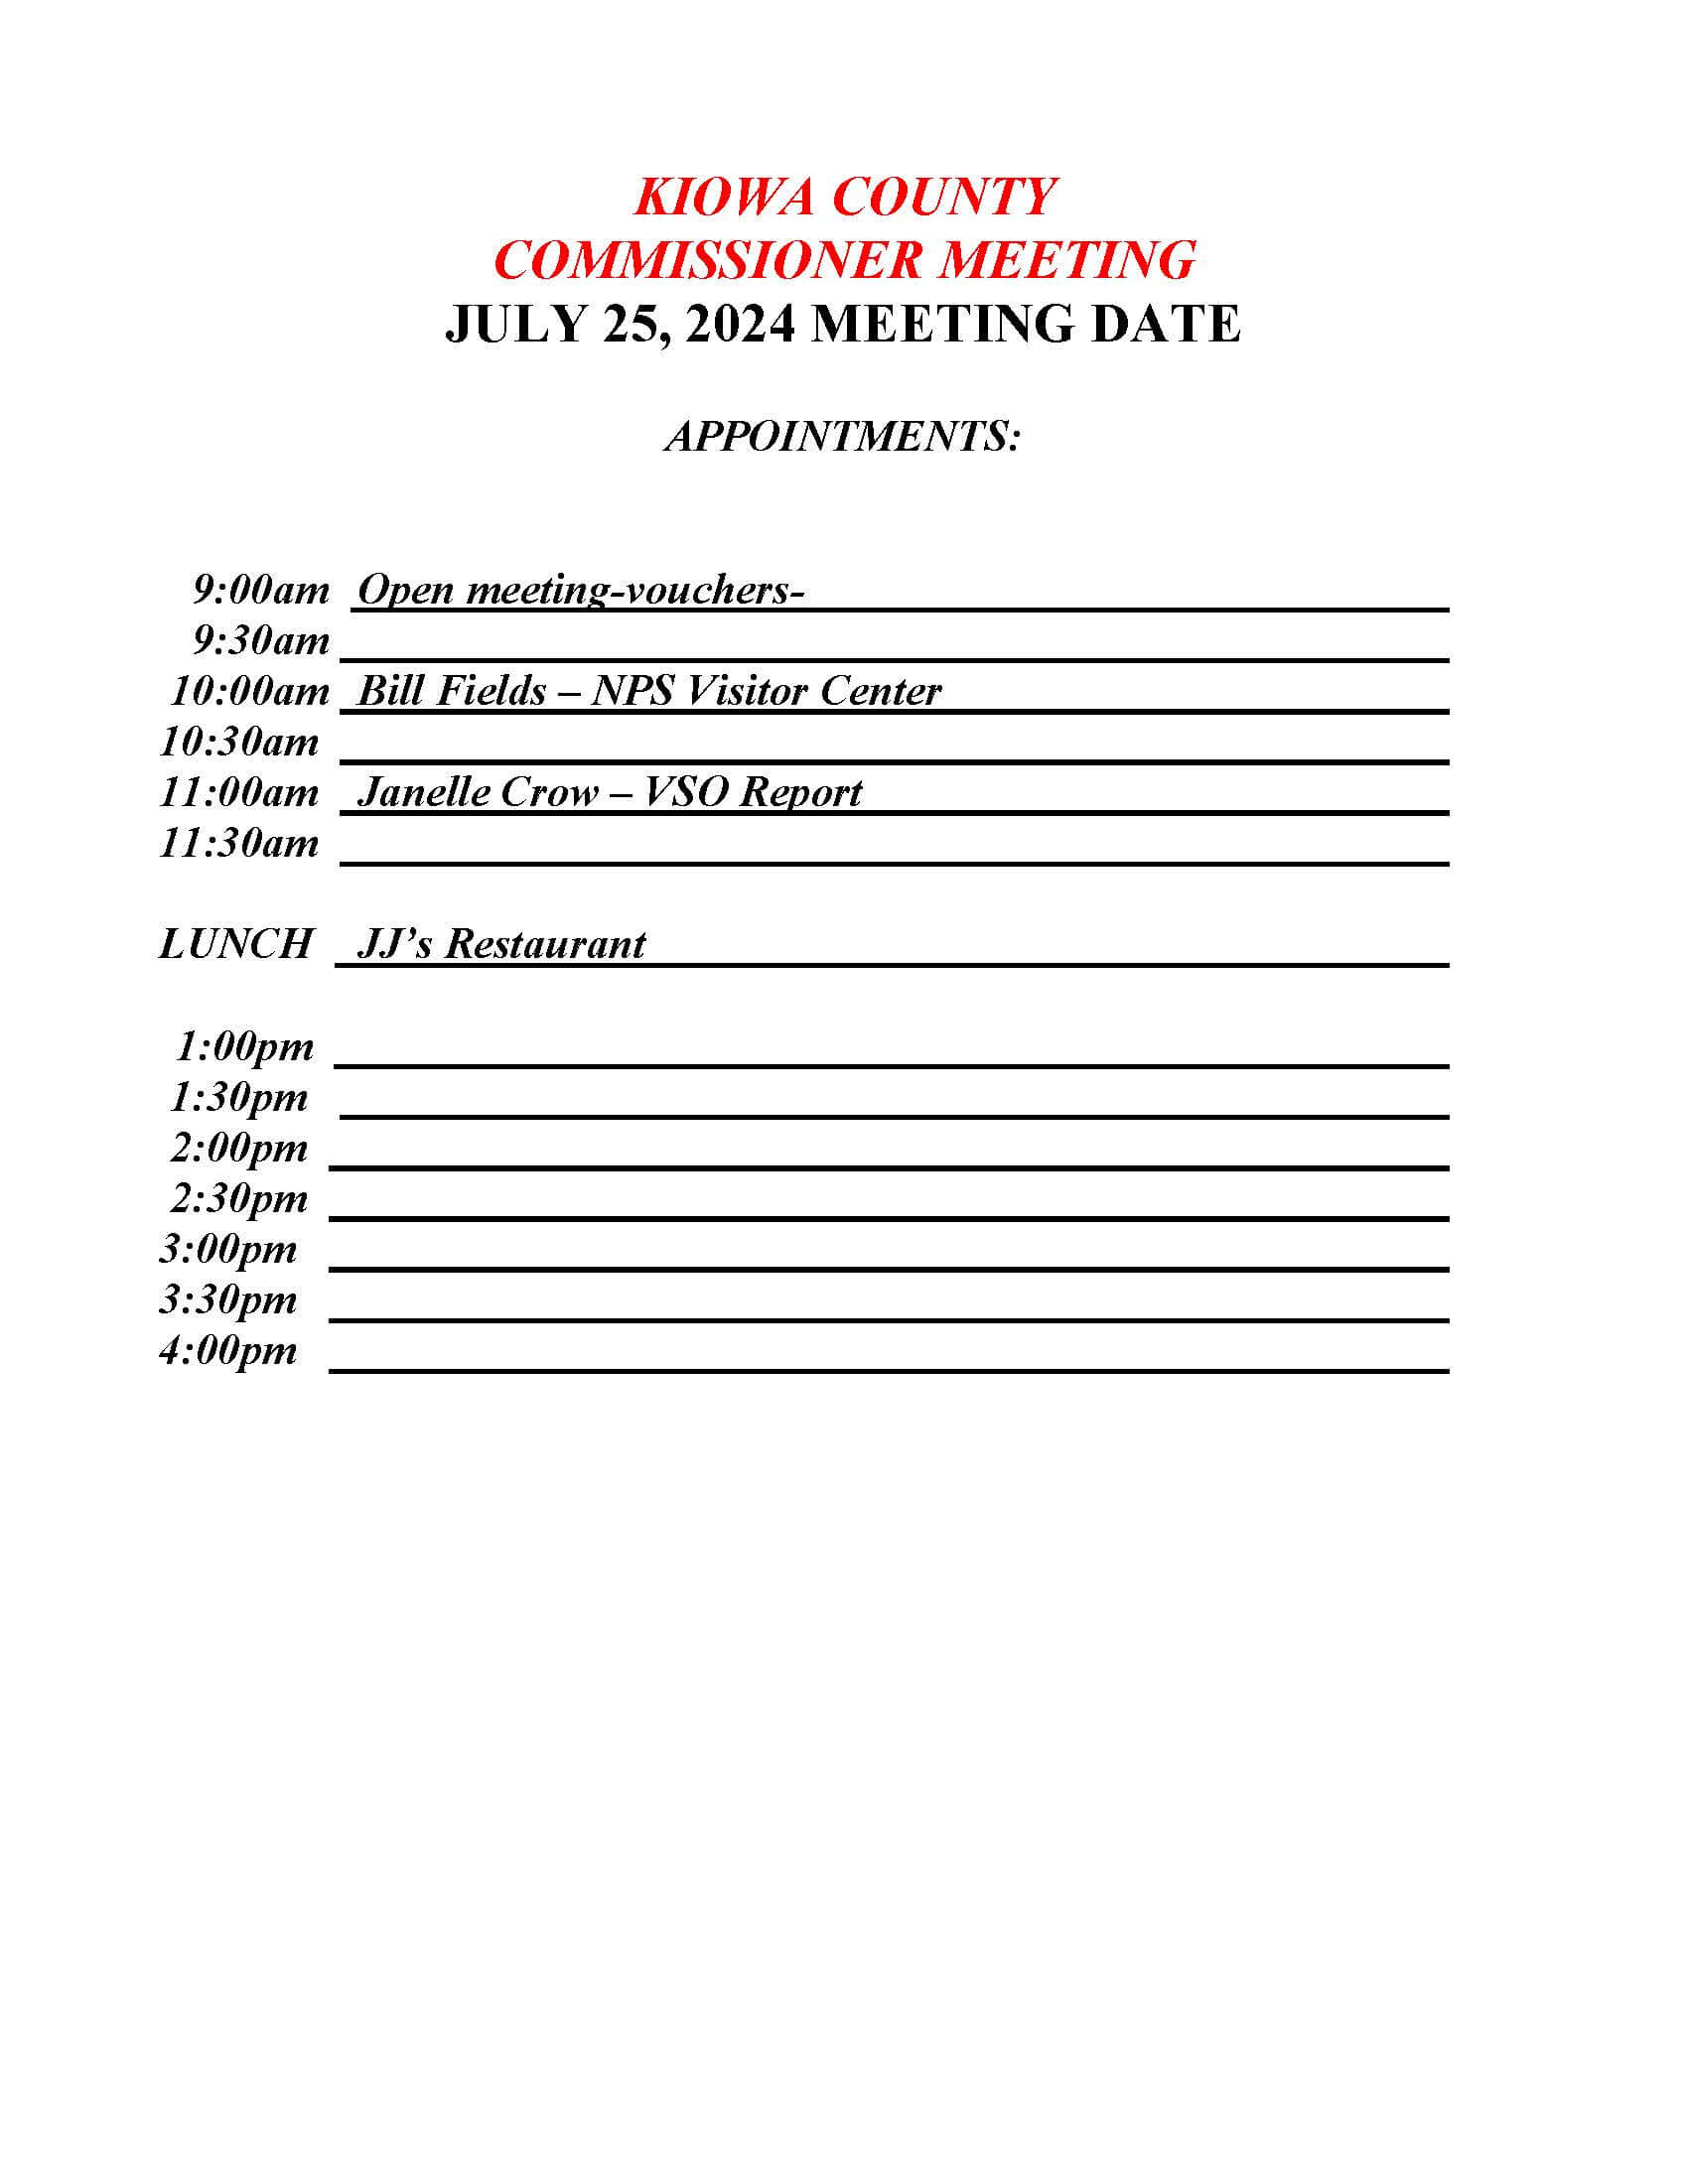 BOCC 7.25.2024 Meeting Schedule